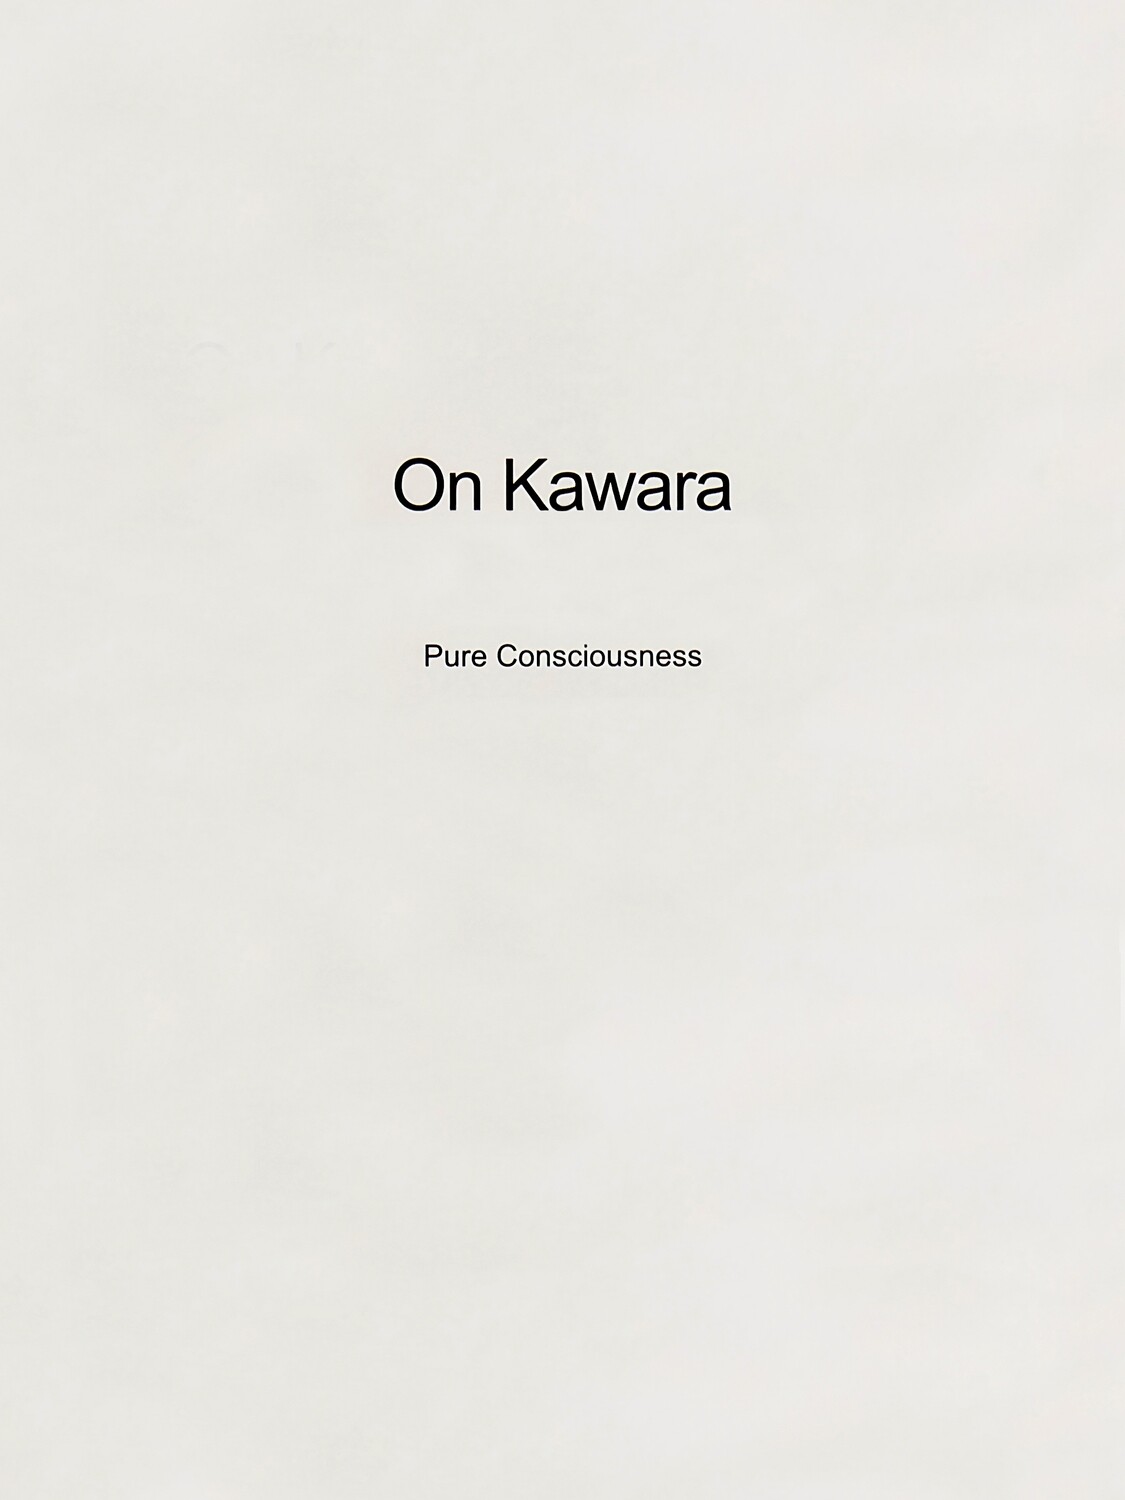 On Kawara: Pure Consciousness